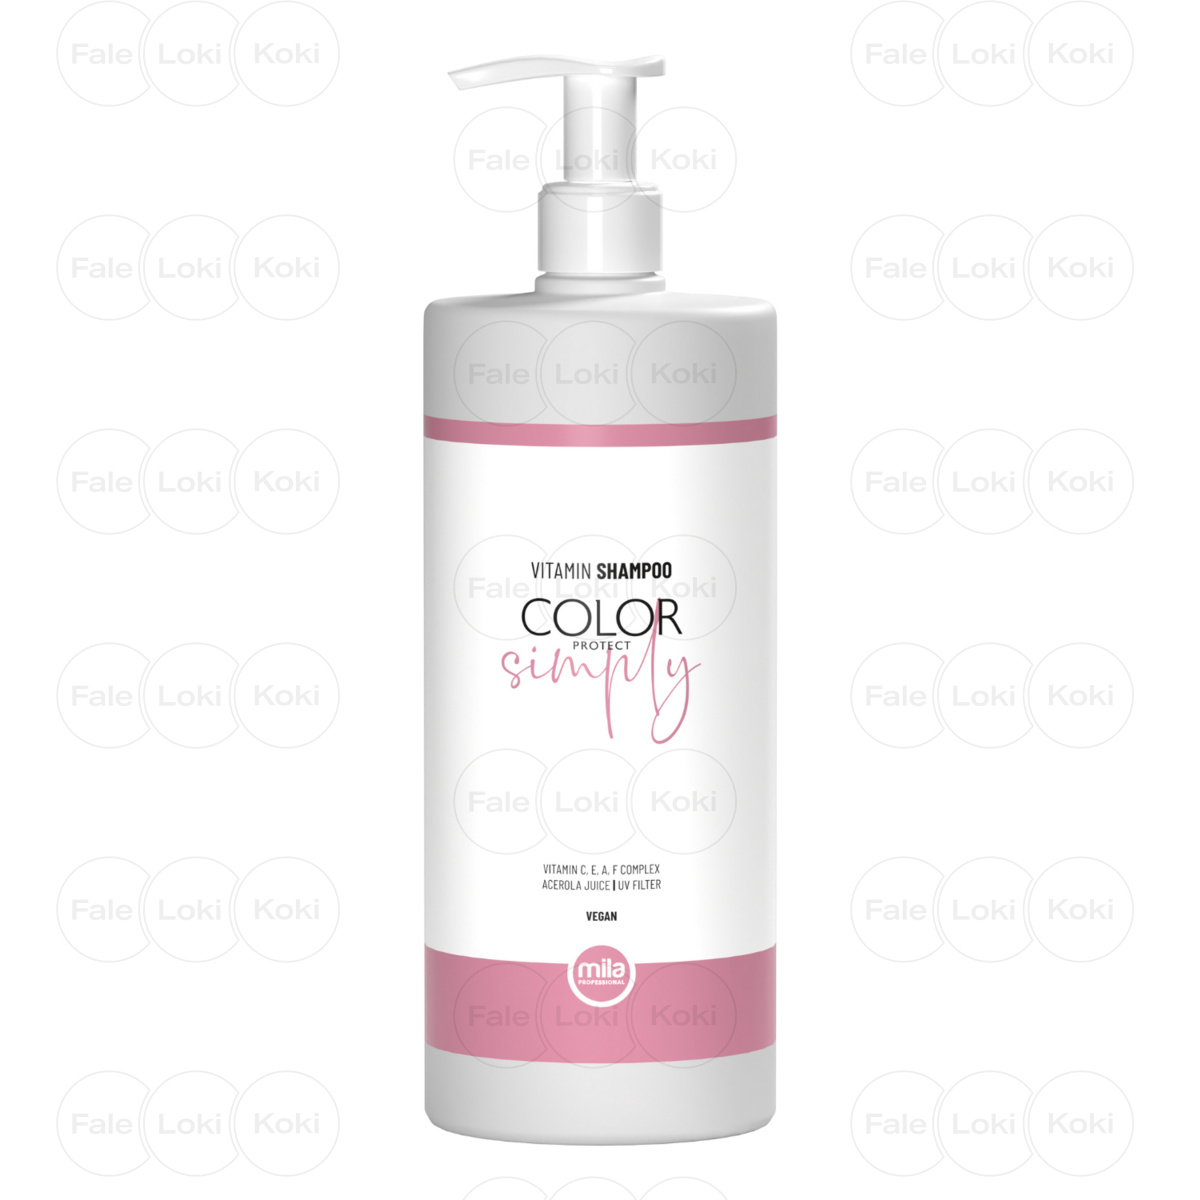 MILA PROFESSIONAL SIMPLY szampon chroniący kolor COLOR PROTECT 950 ml